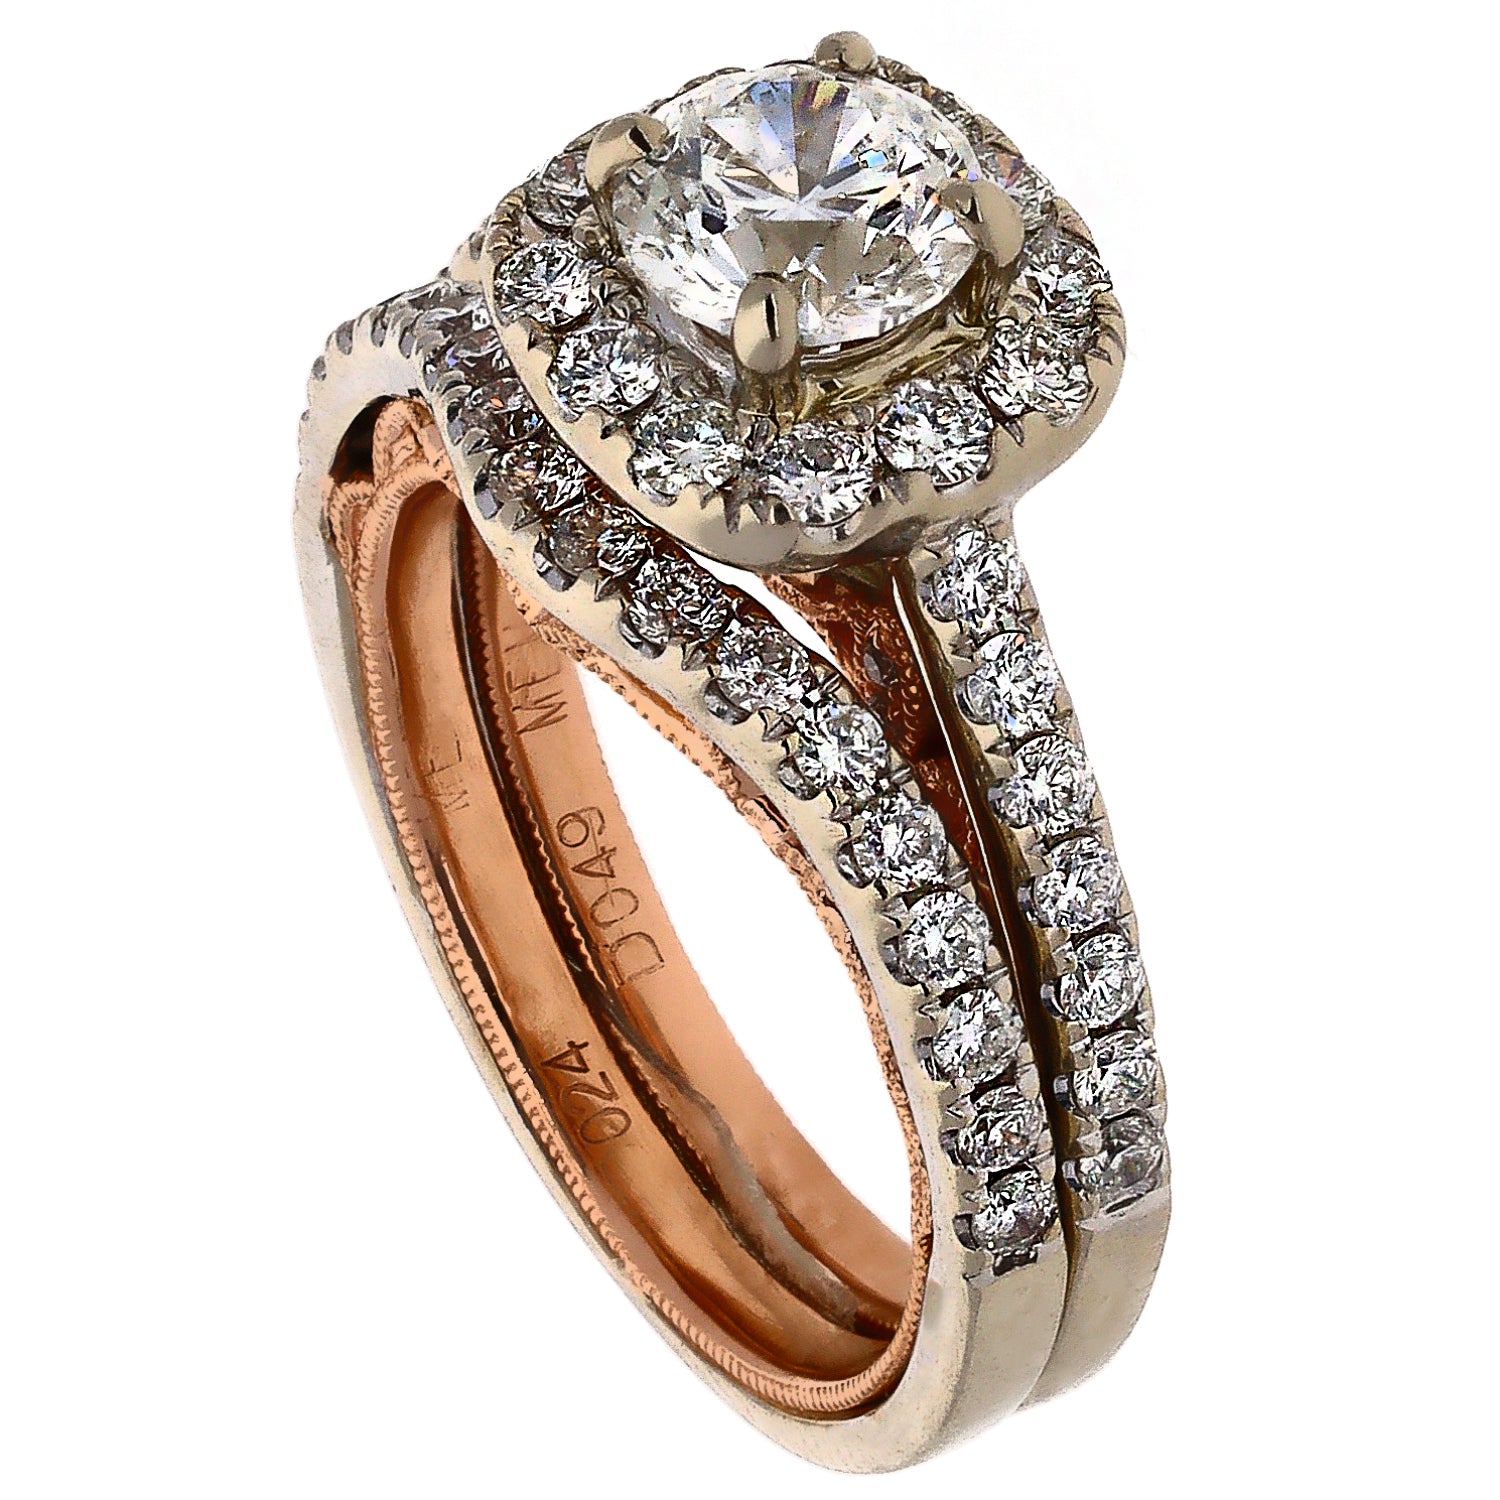 14K White and Rose Gold Diamond Engagement Ring and Wedding Band Set